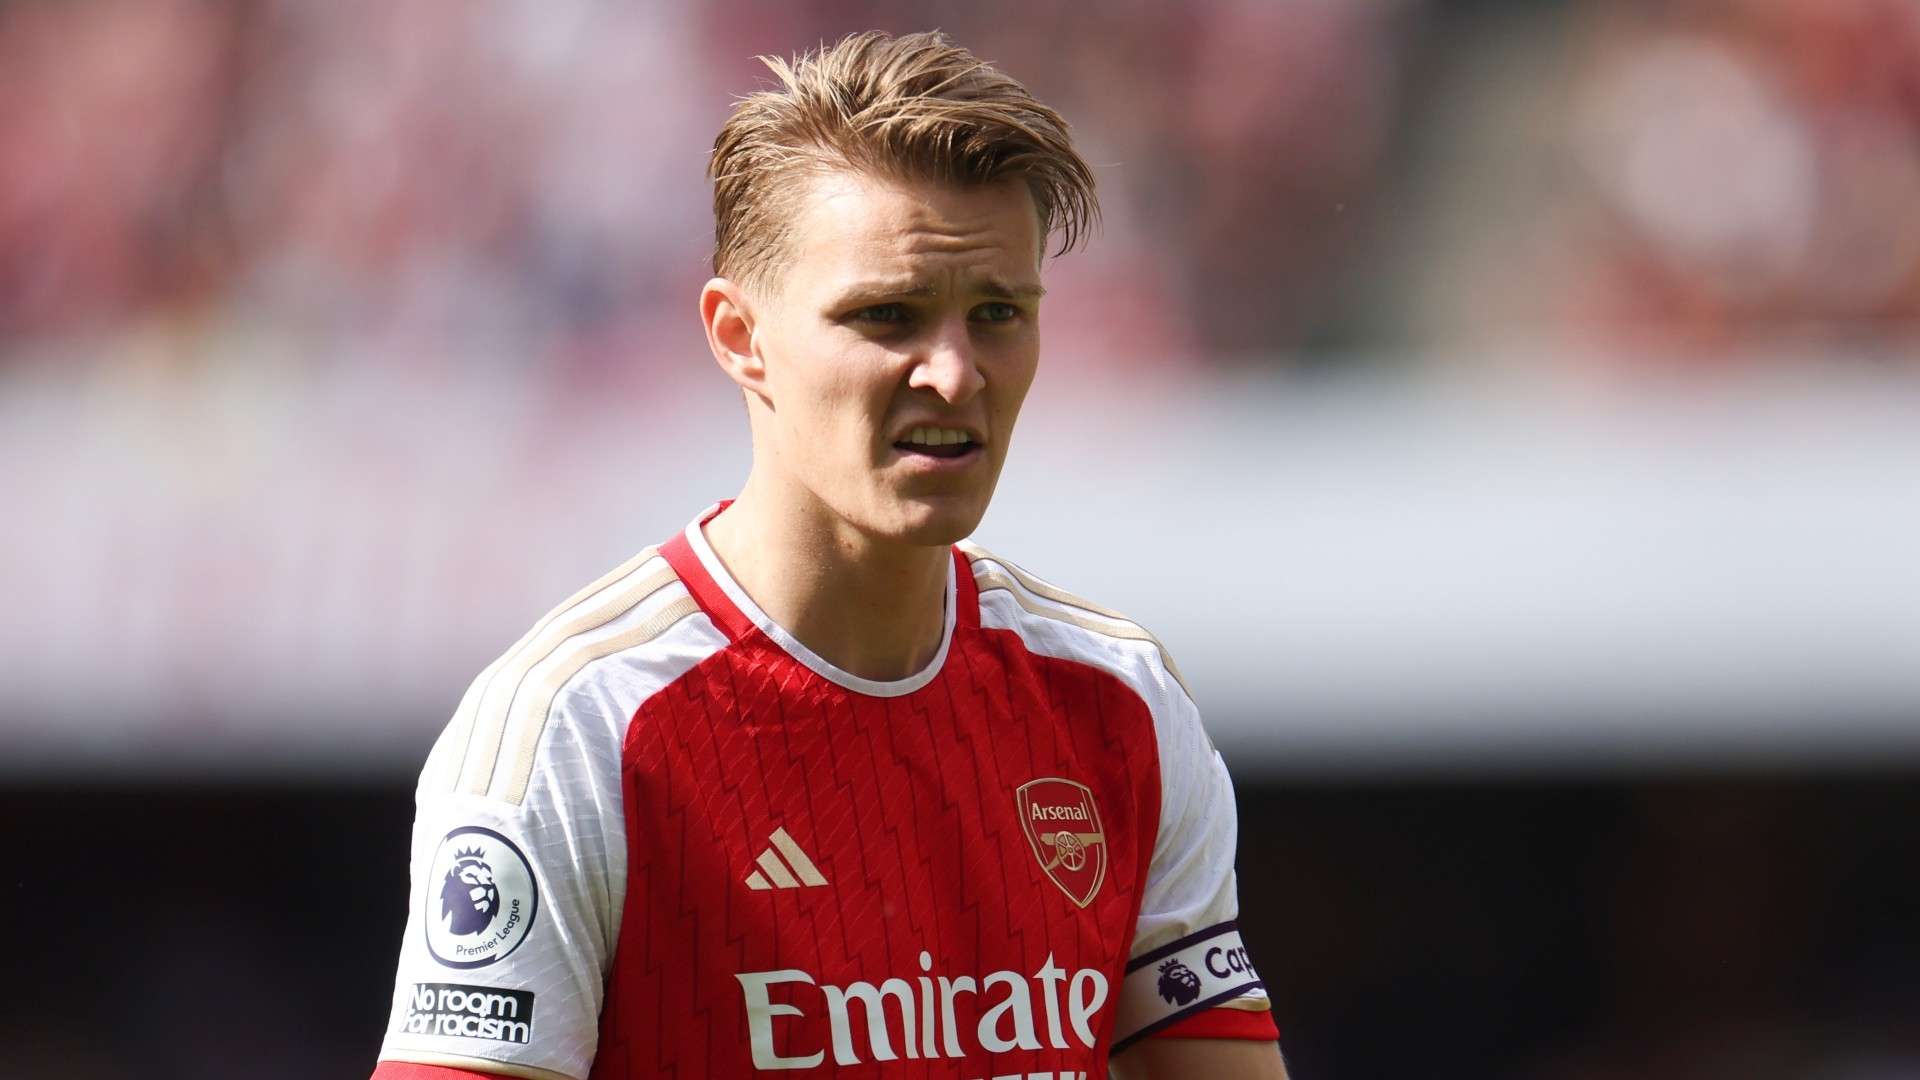 Martin Odegaard Arsenal 2022-23 (New Kit)